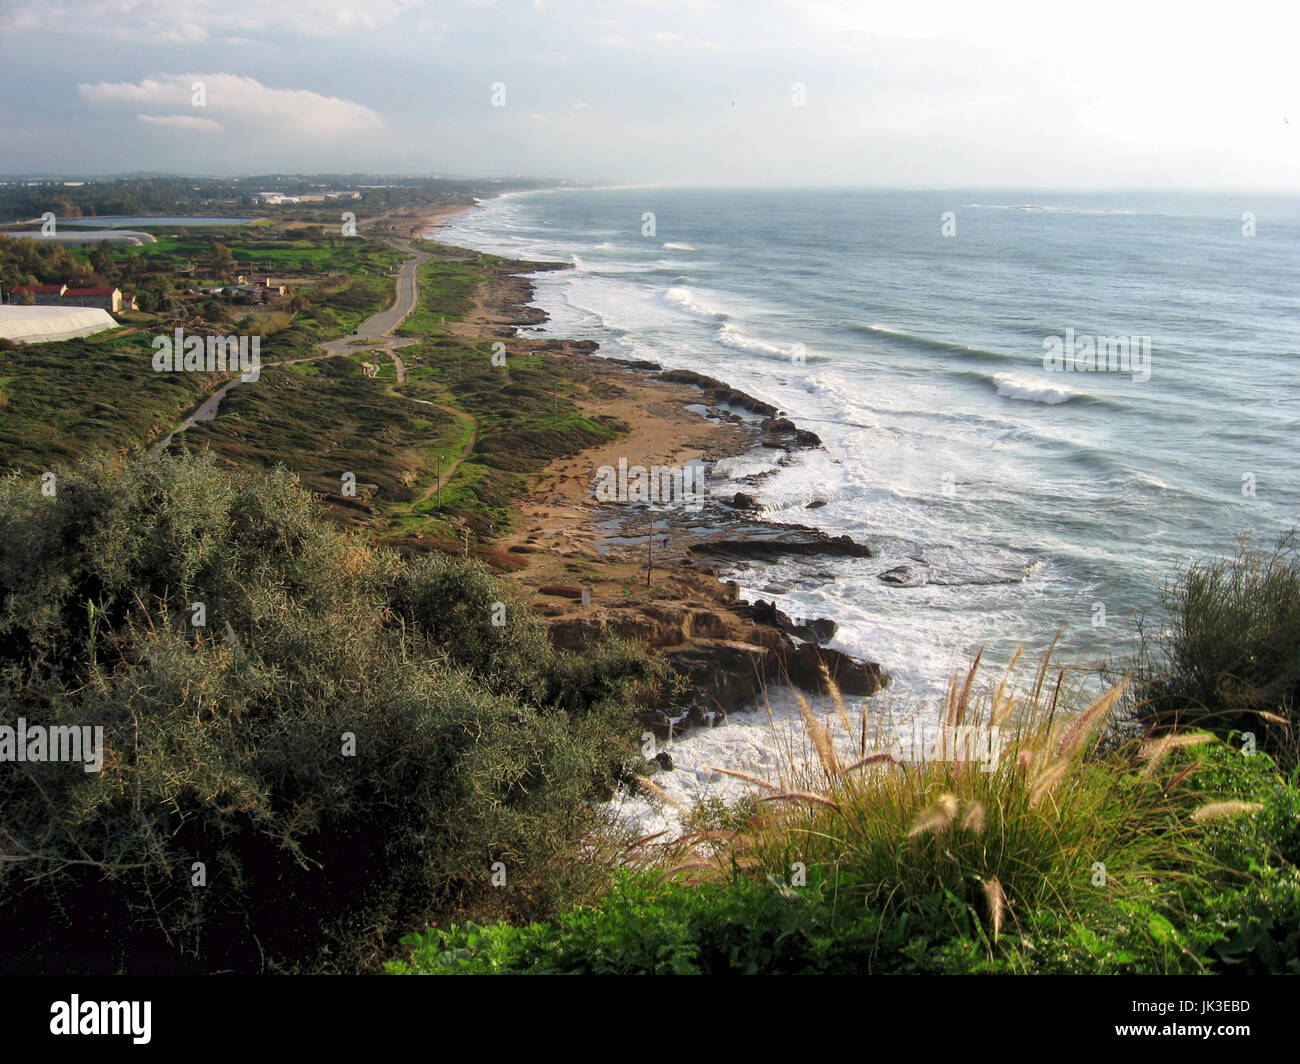 View overlooking the Mediterranean Sea and the Israeli coastline from Rosh HaNikra kibbutz. Stock Photo